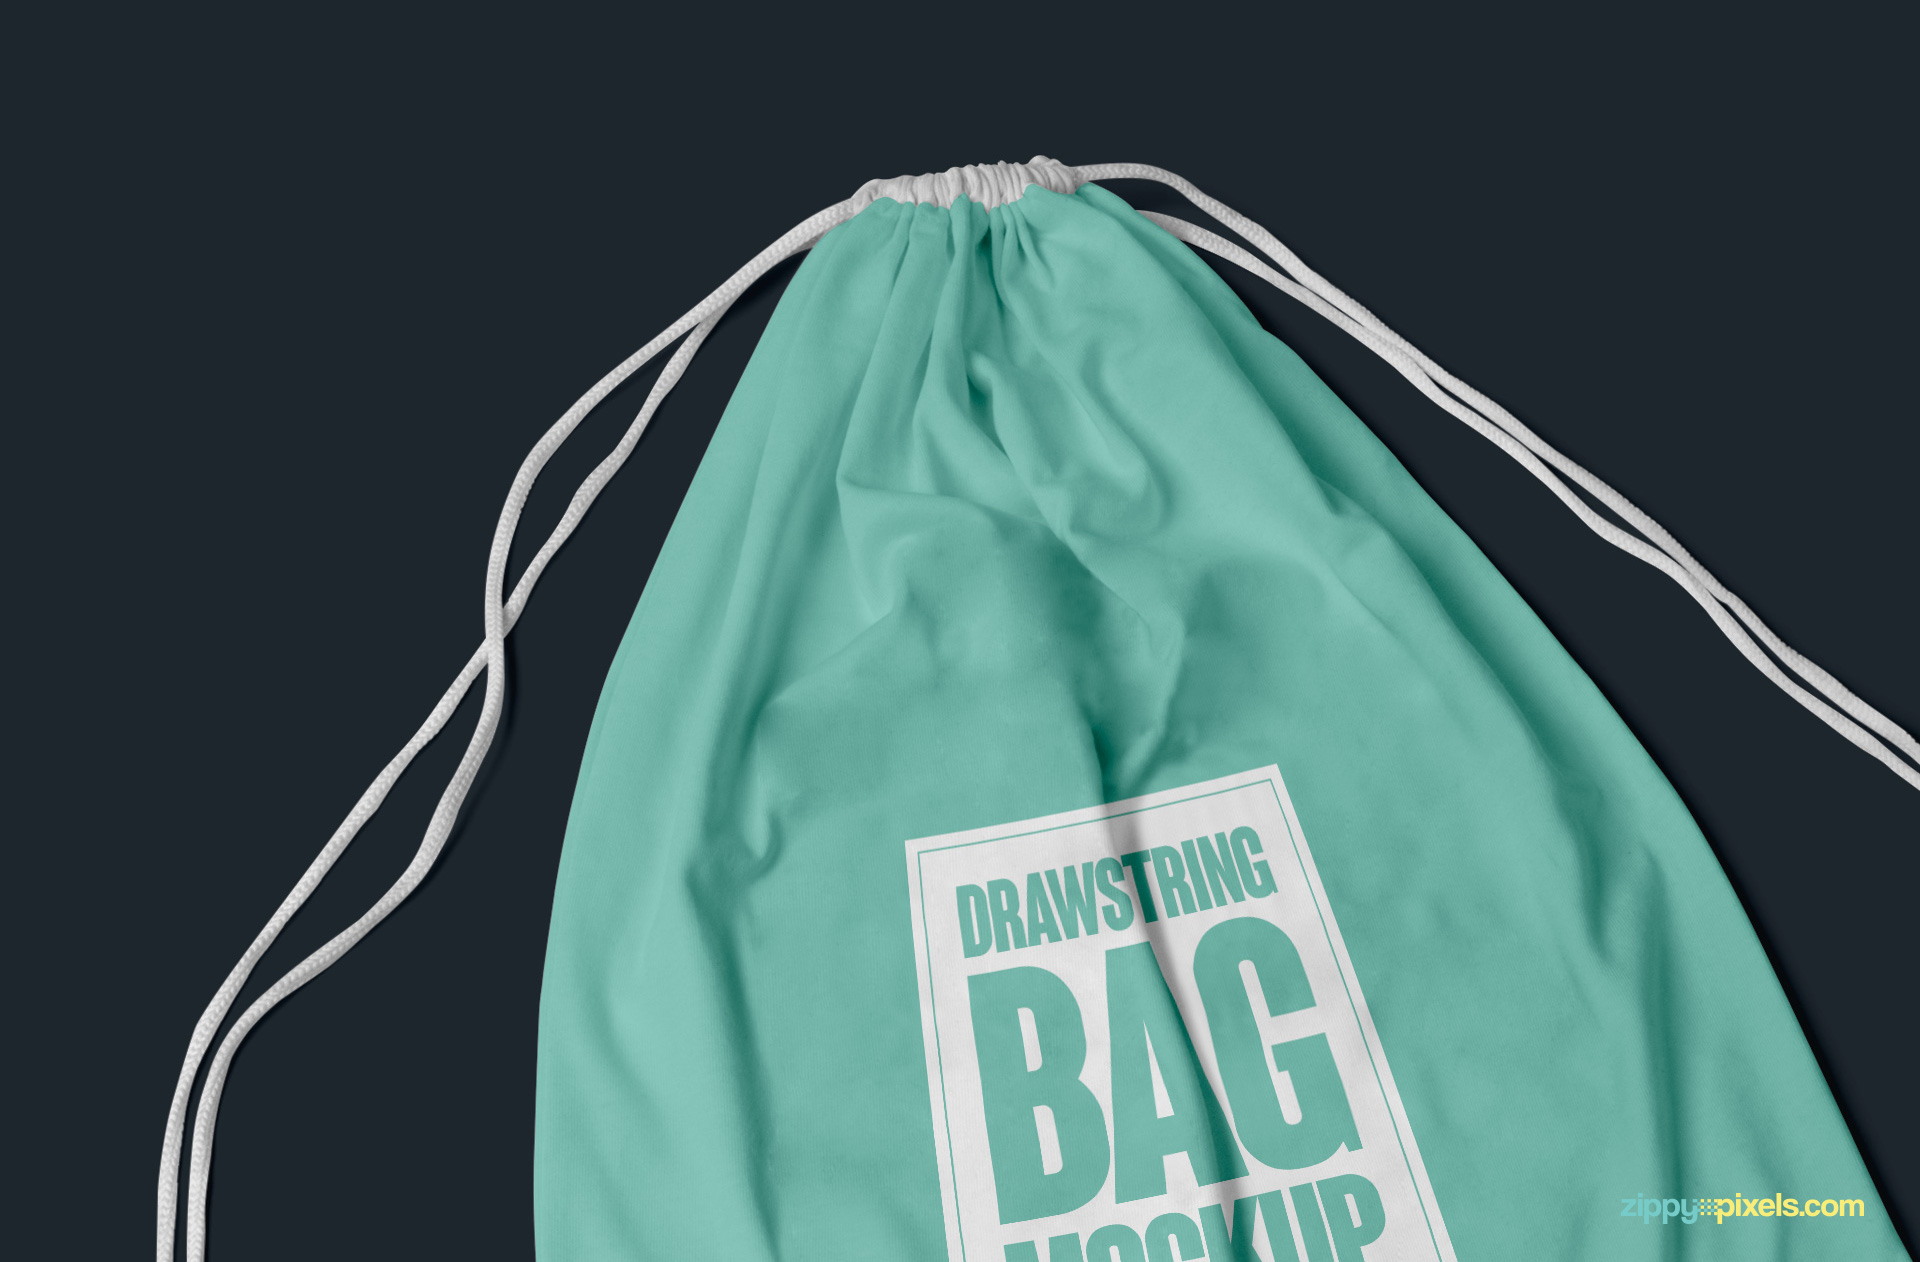 free drawstring bag mockup for merchandising